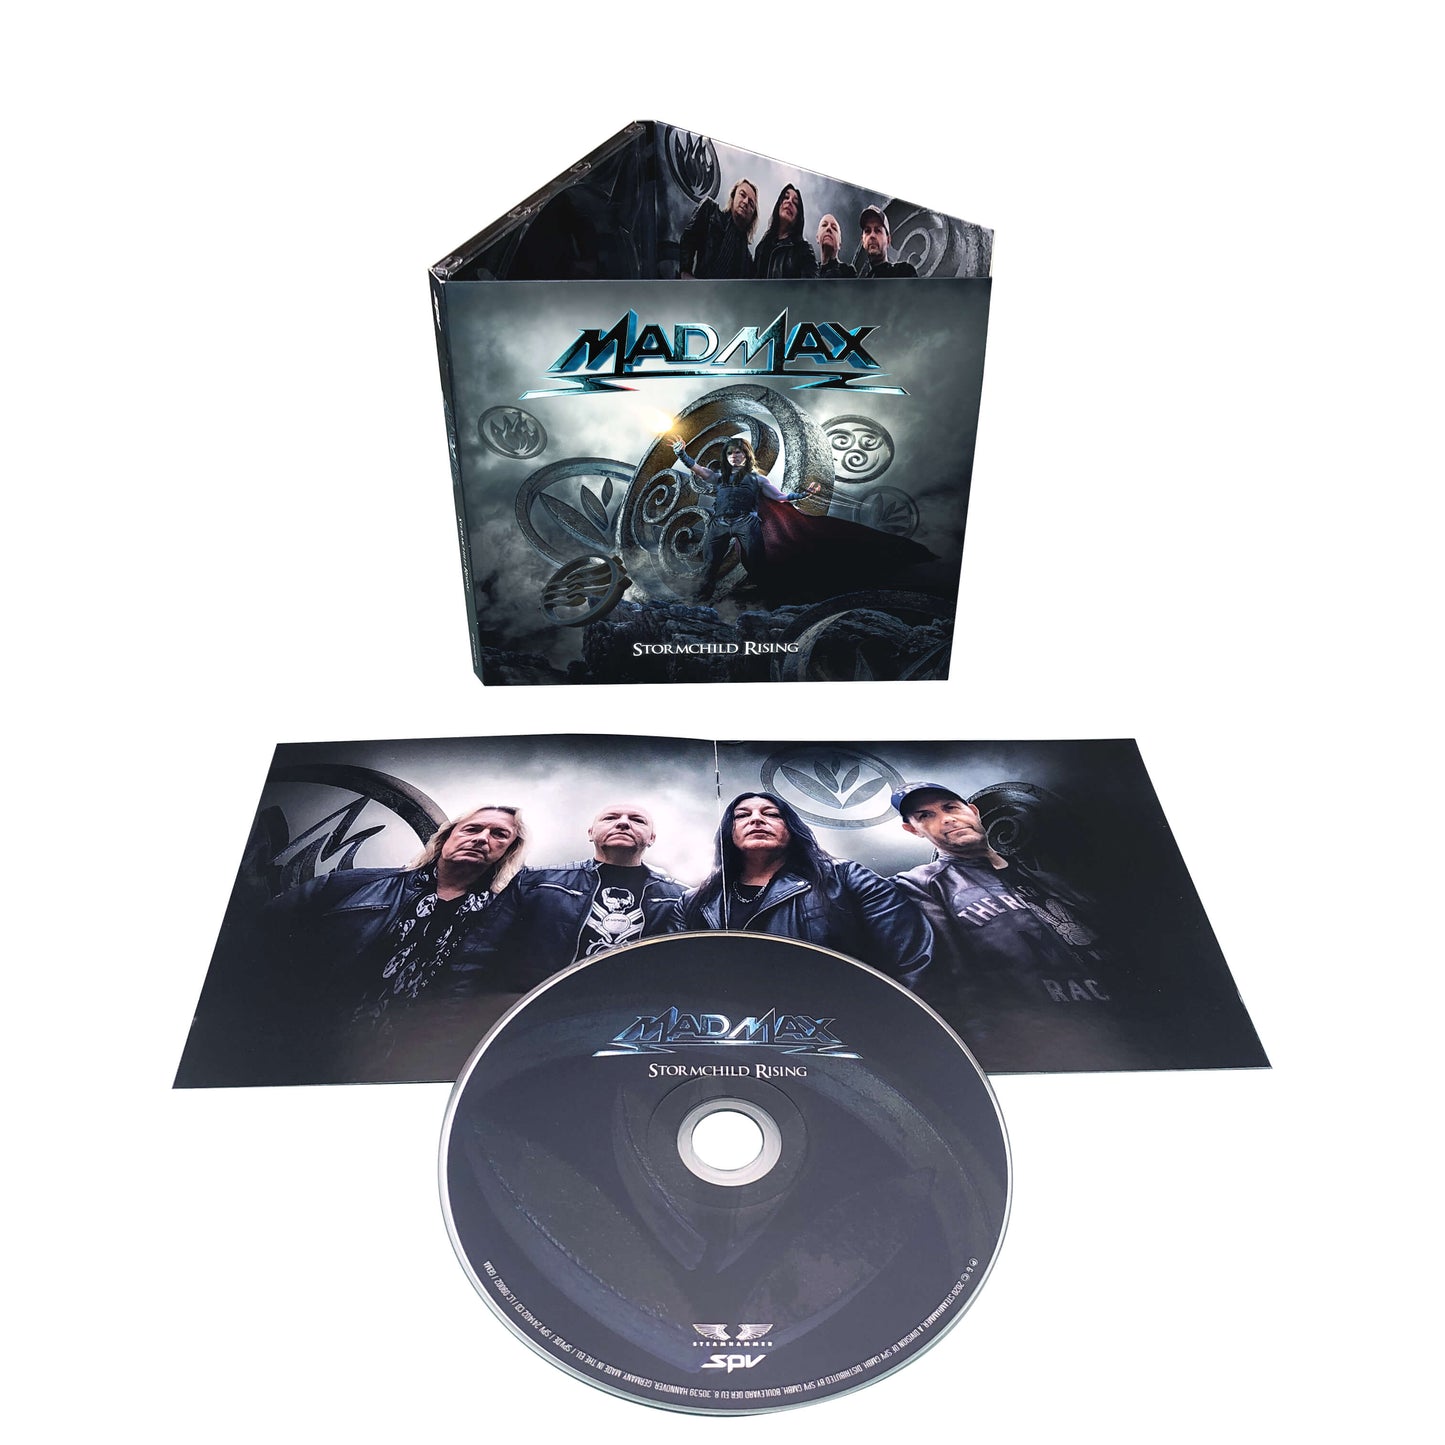 Mad Max "Stormchild Rising" CD